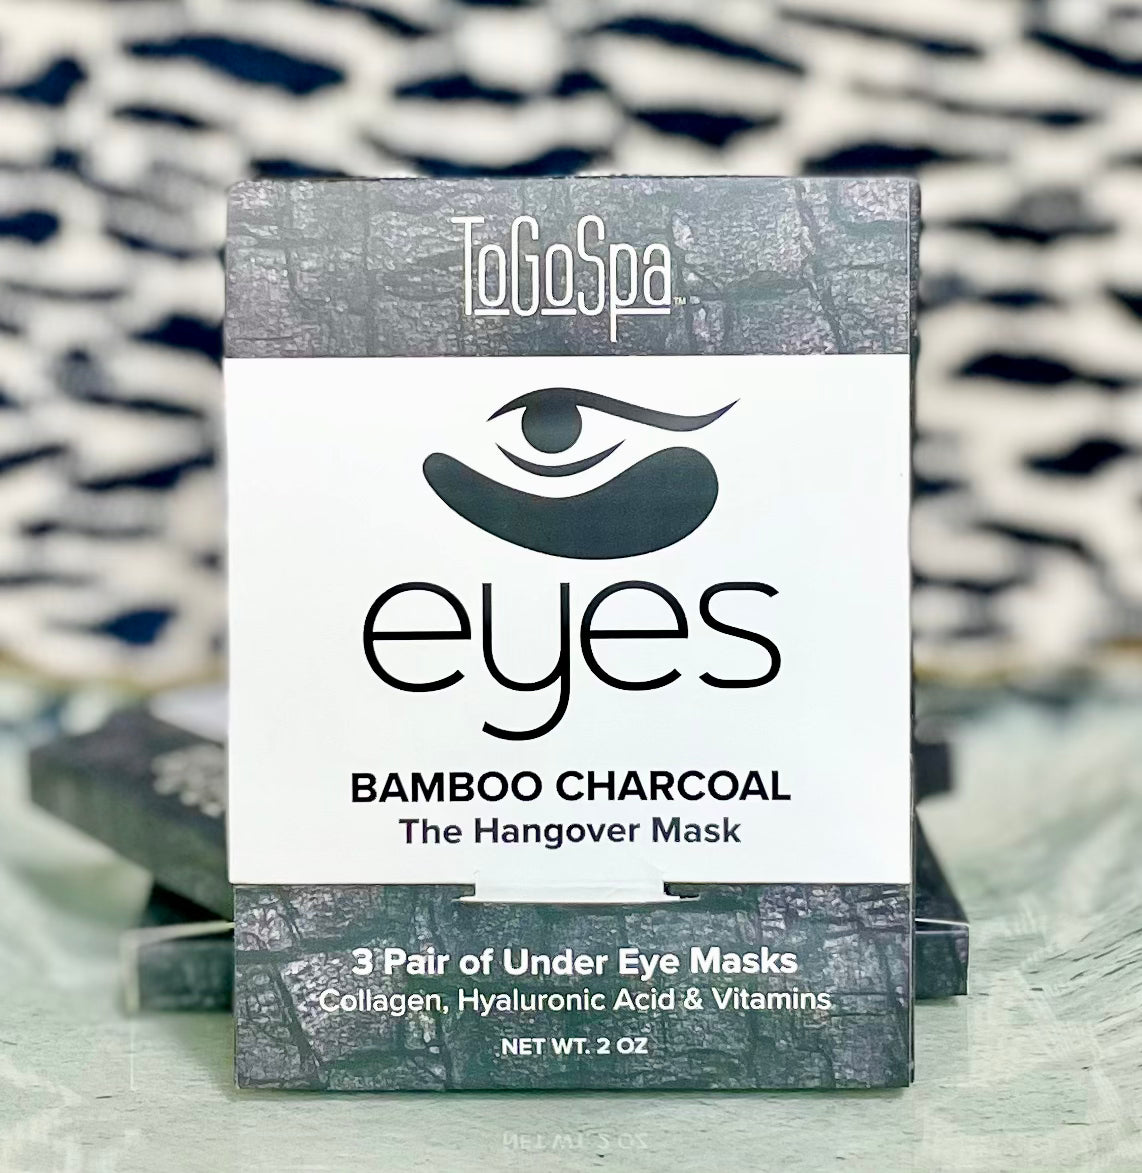 To Go Spa eye masks - bamboo charcoal